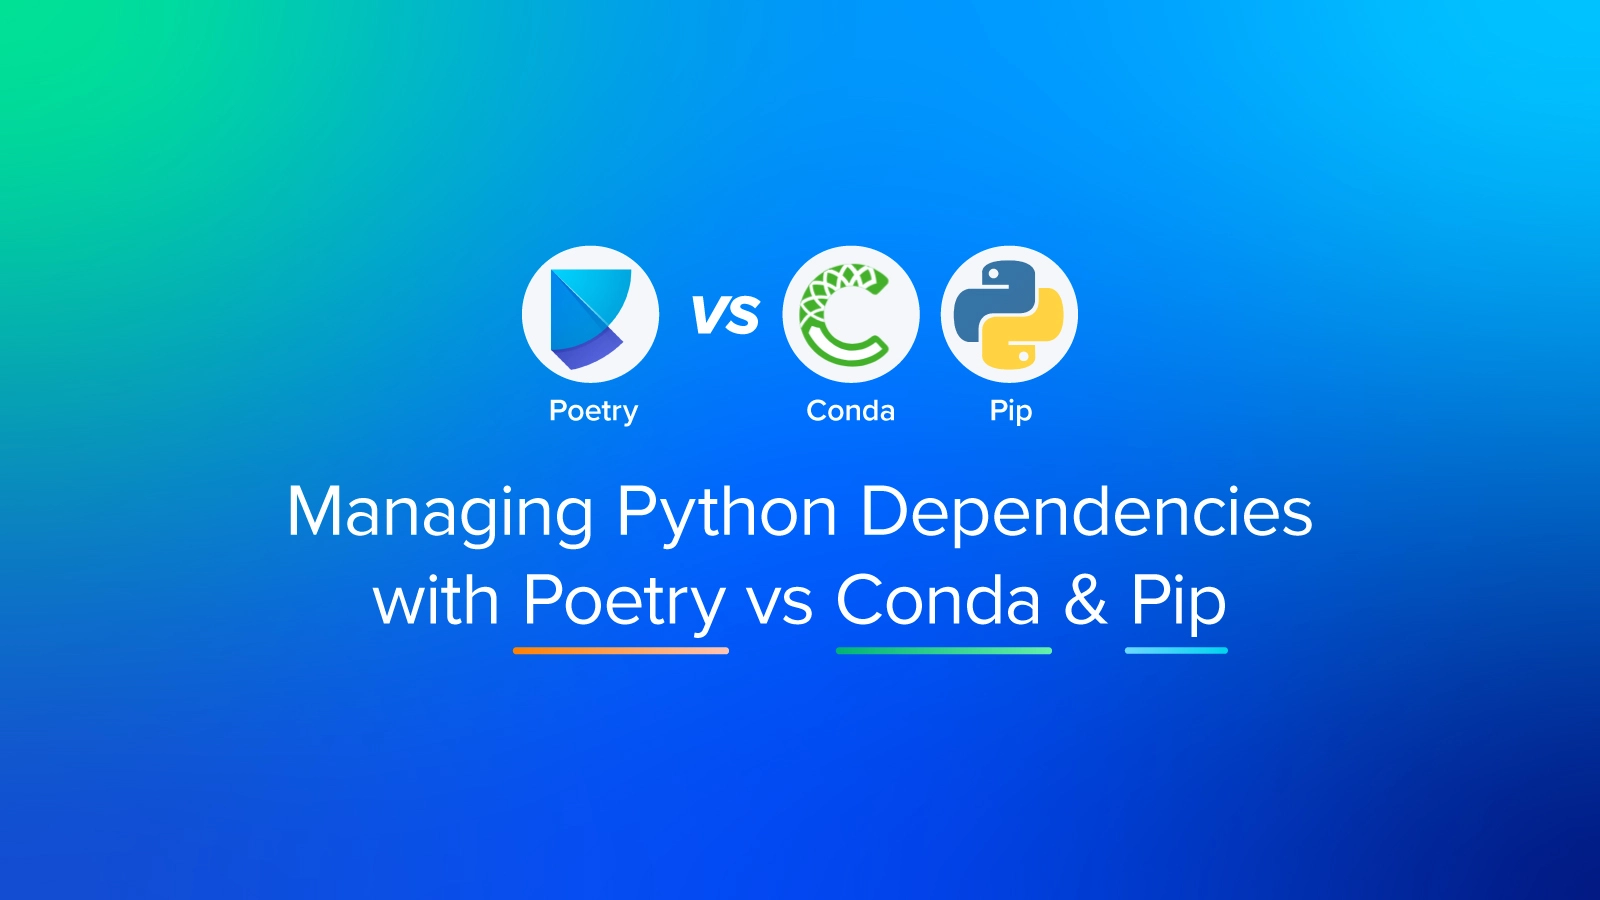 Managing Python Dependencies with Poetry vs Conda & Pip